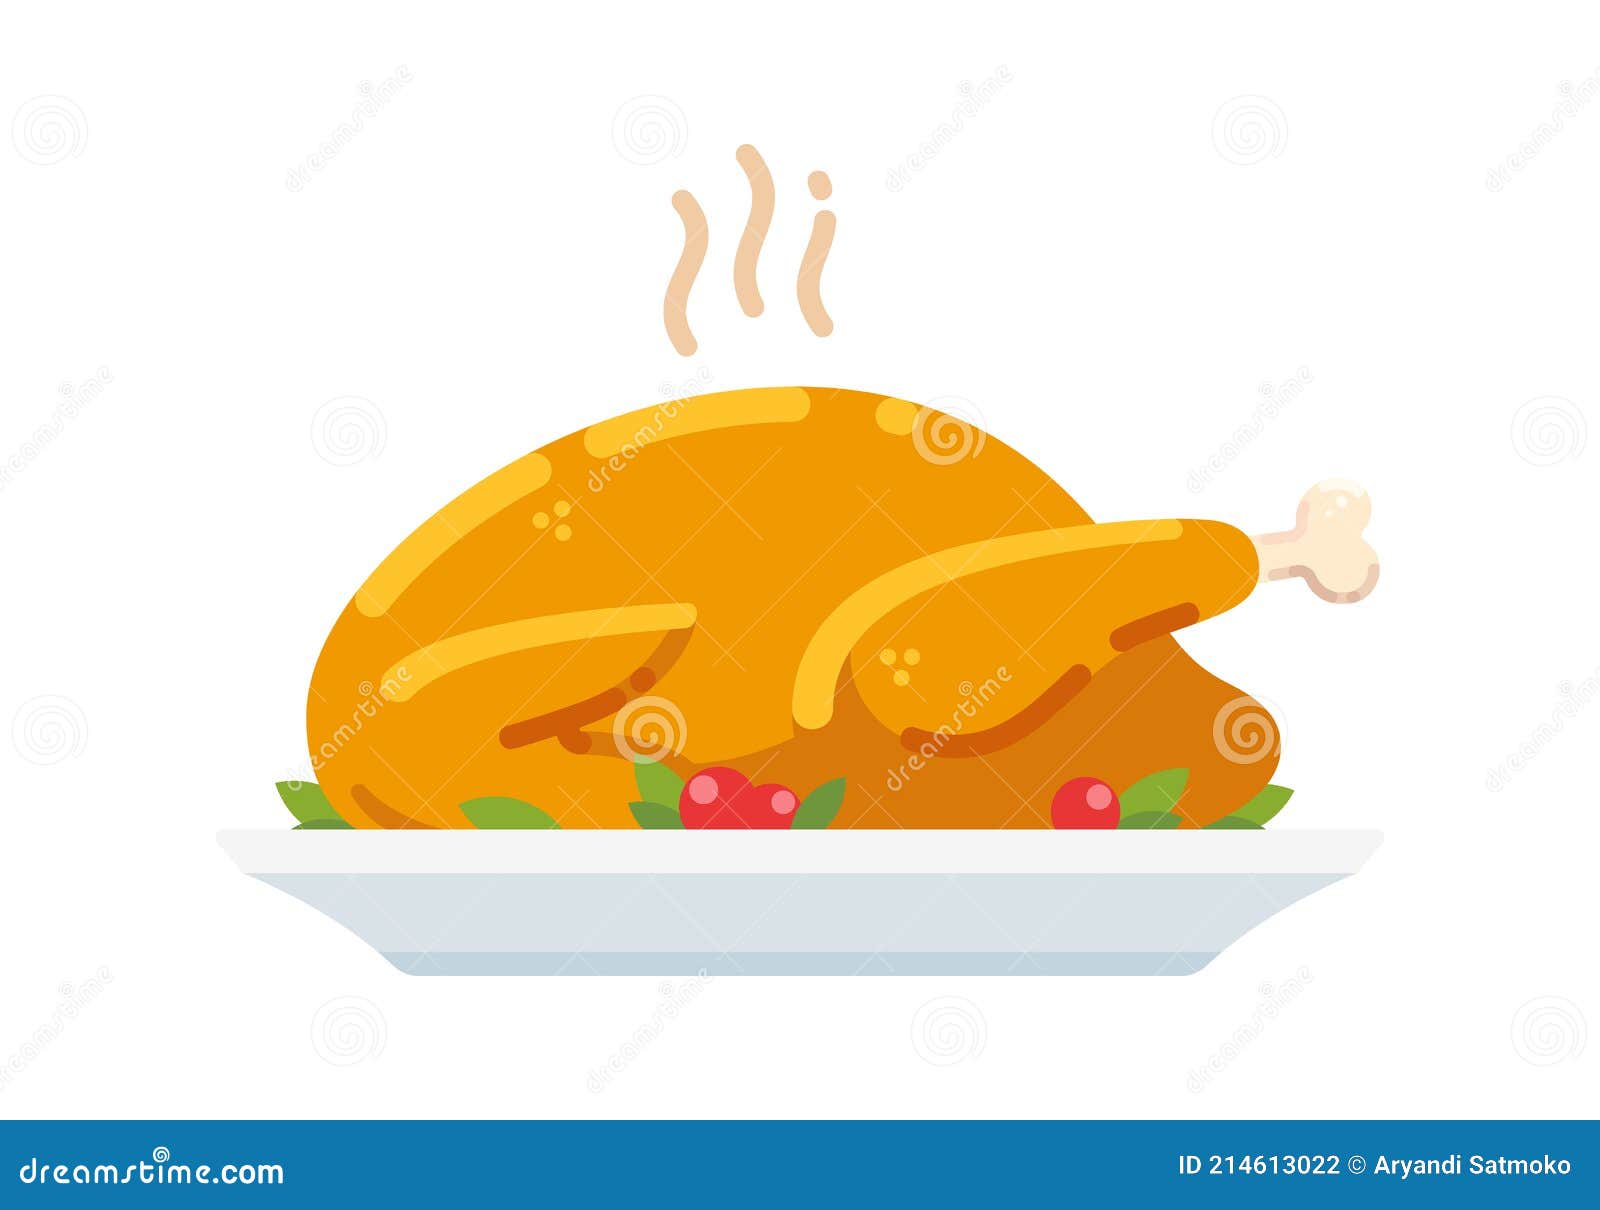 Roast Turkey or Chicken on Plate, Traditional Holiday Dinner Vector Clip  Art Illustration Stock Vector - Illustration of meal, design: 214613022